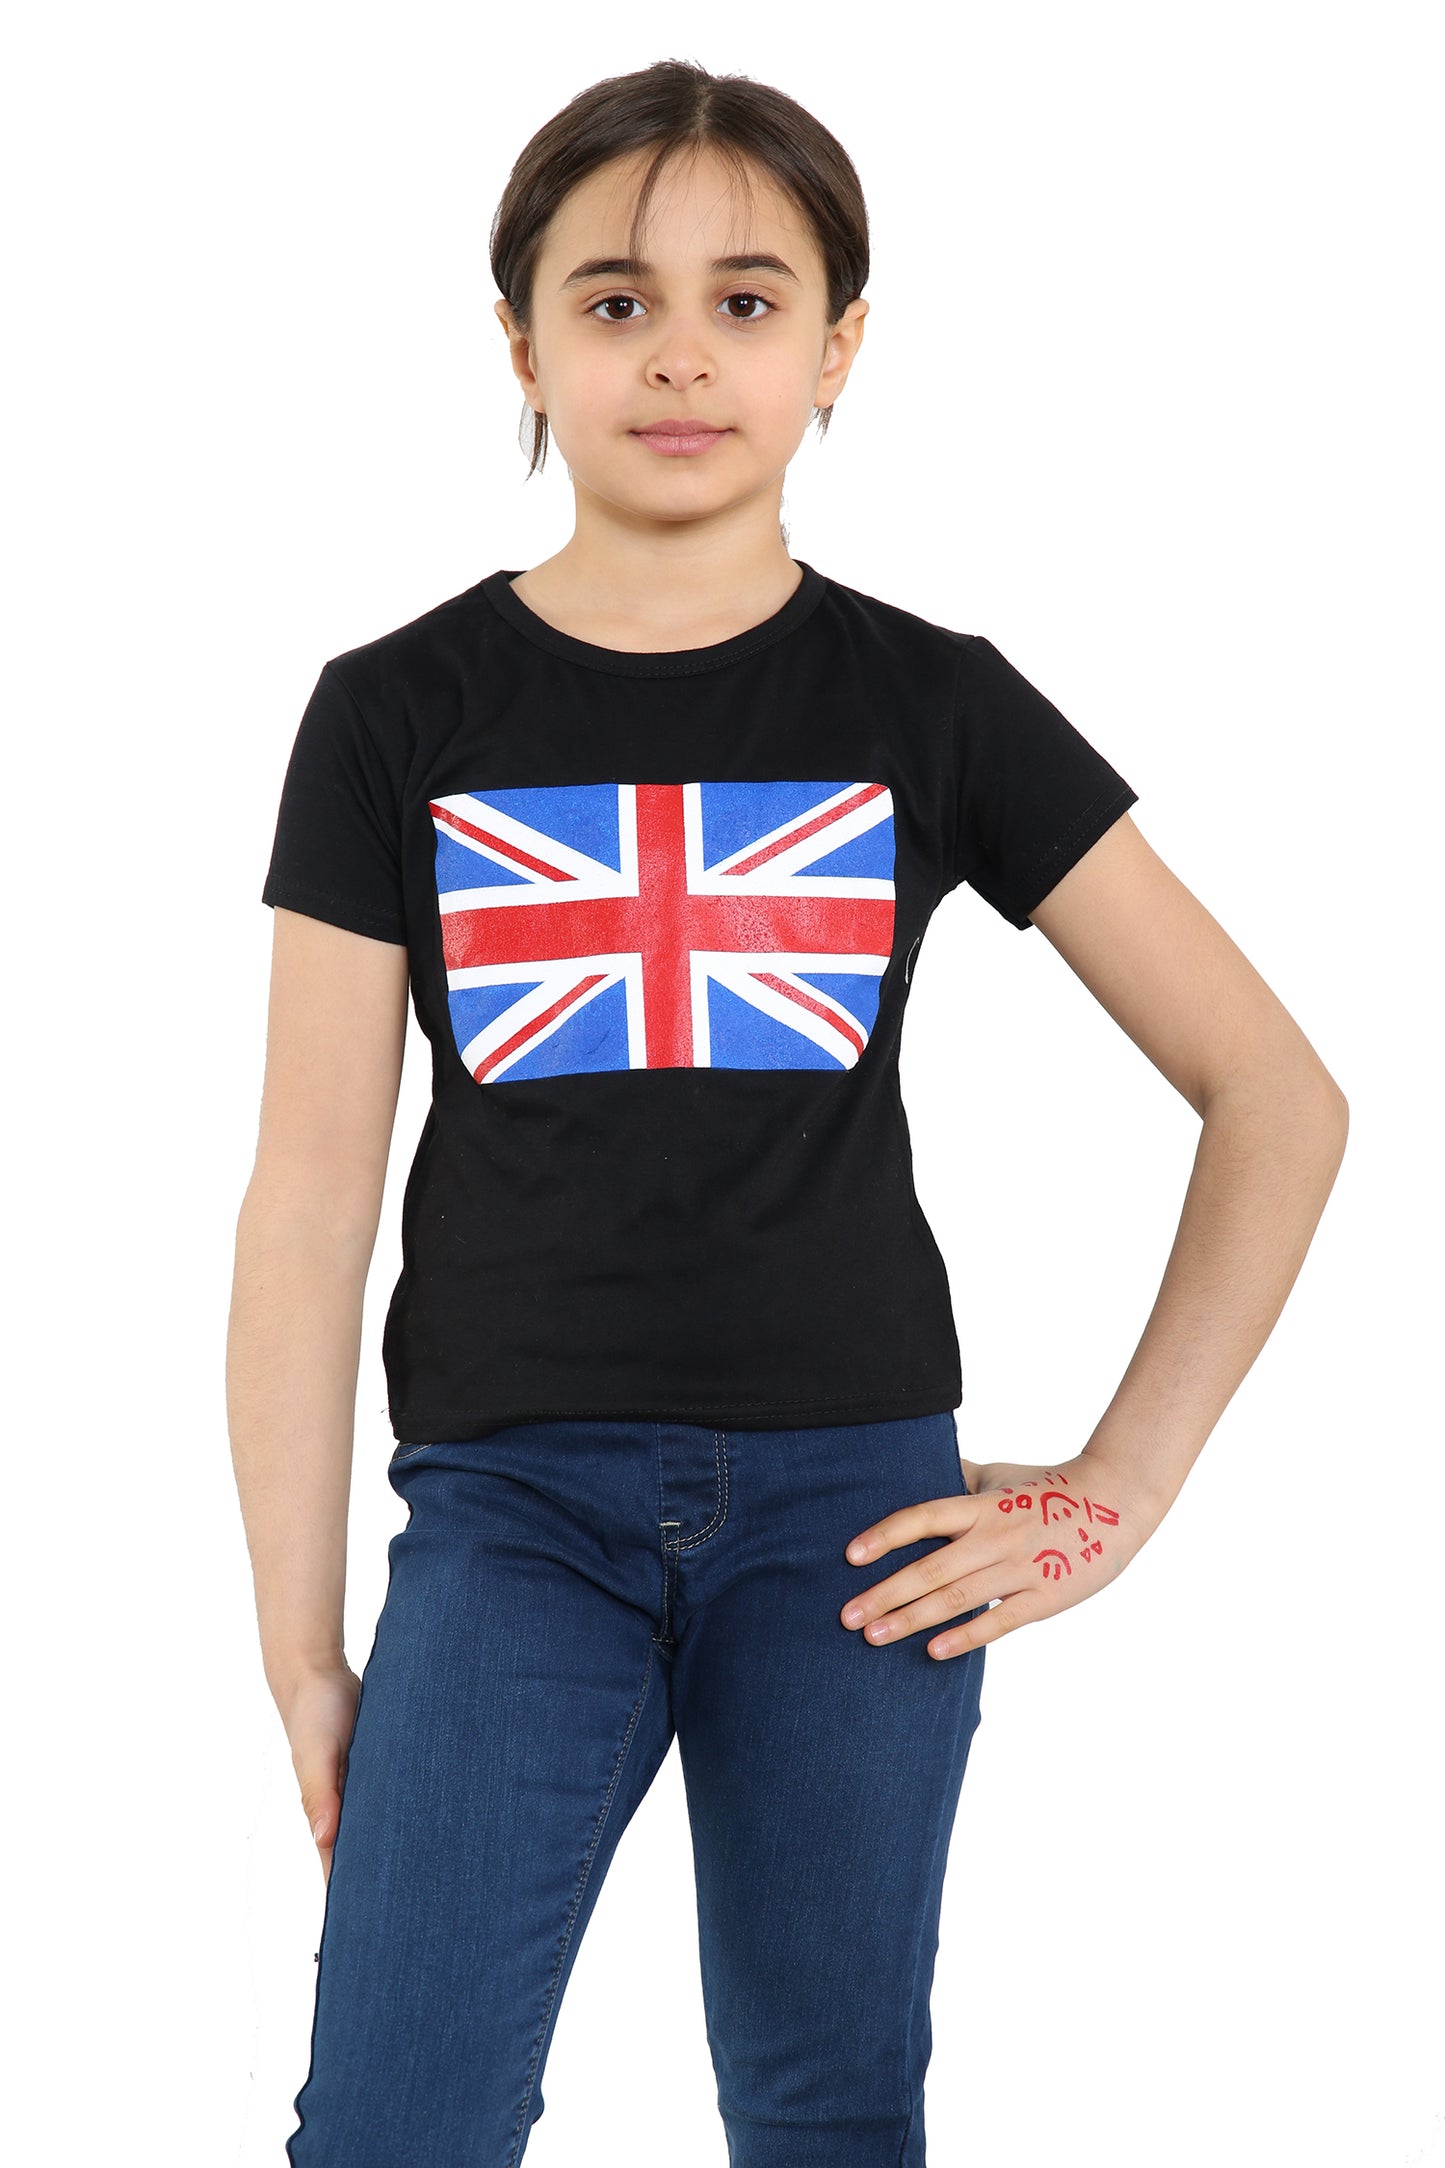 Girls Union Jack King Charles III Coronation 3/4 Length T-Shirt